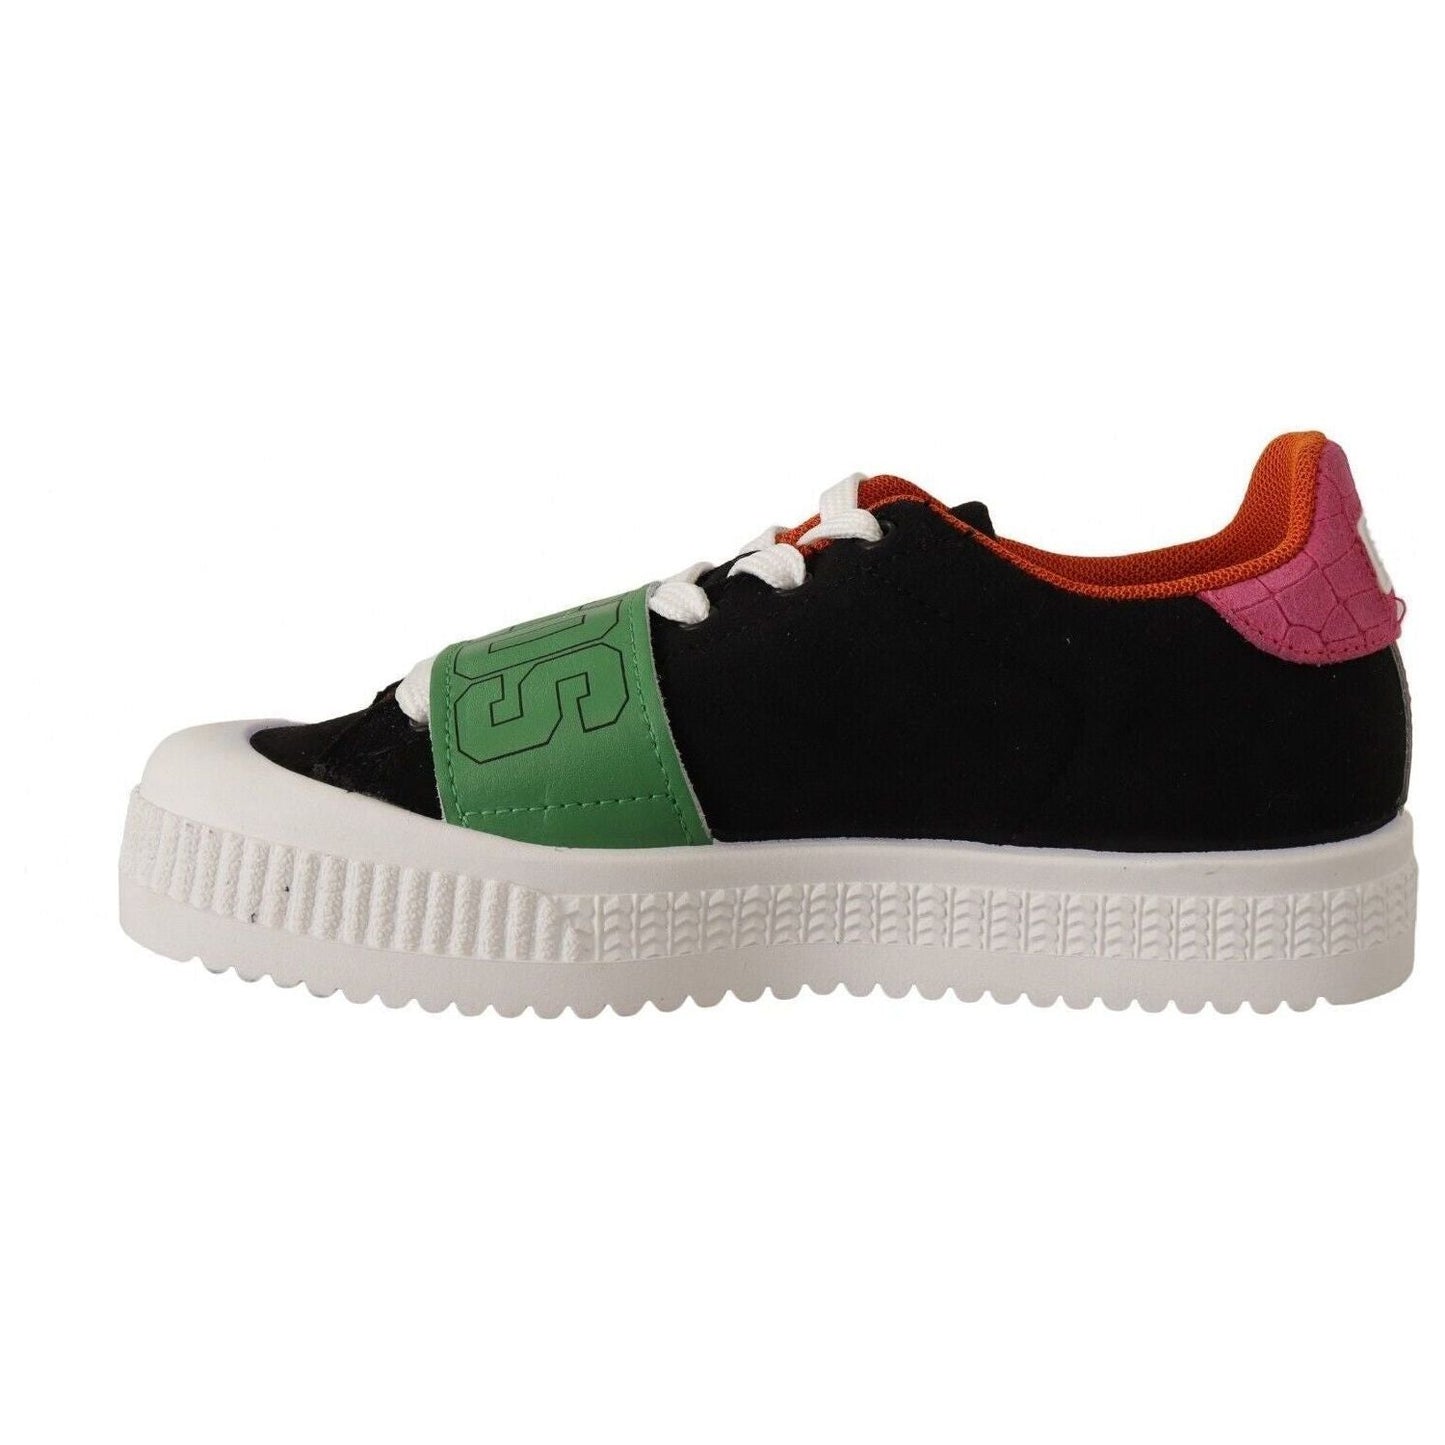 GCDS Stylish Multicolor Low Top Lace-Up Sneakers multicolor-suede-low-top-lace-up-women-sneakers-shoes